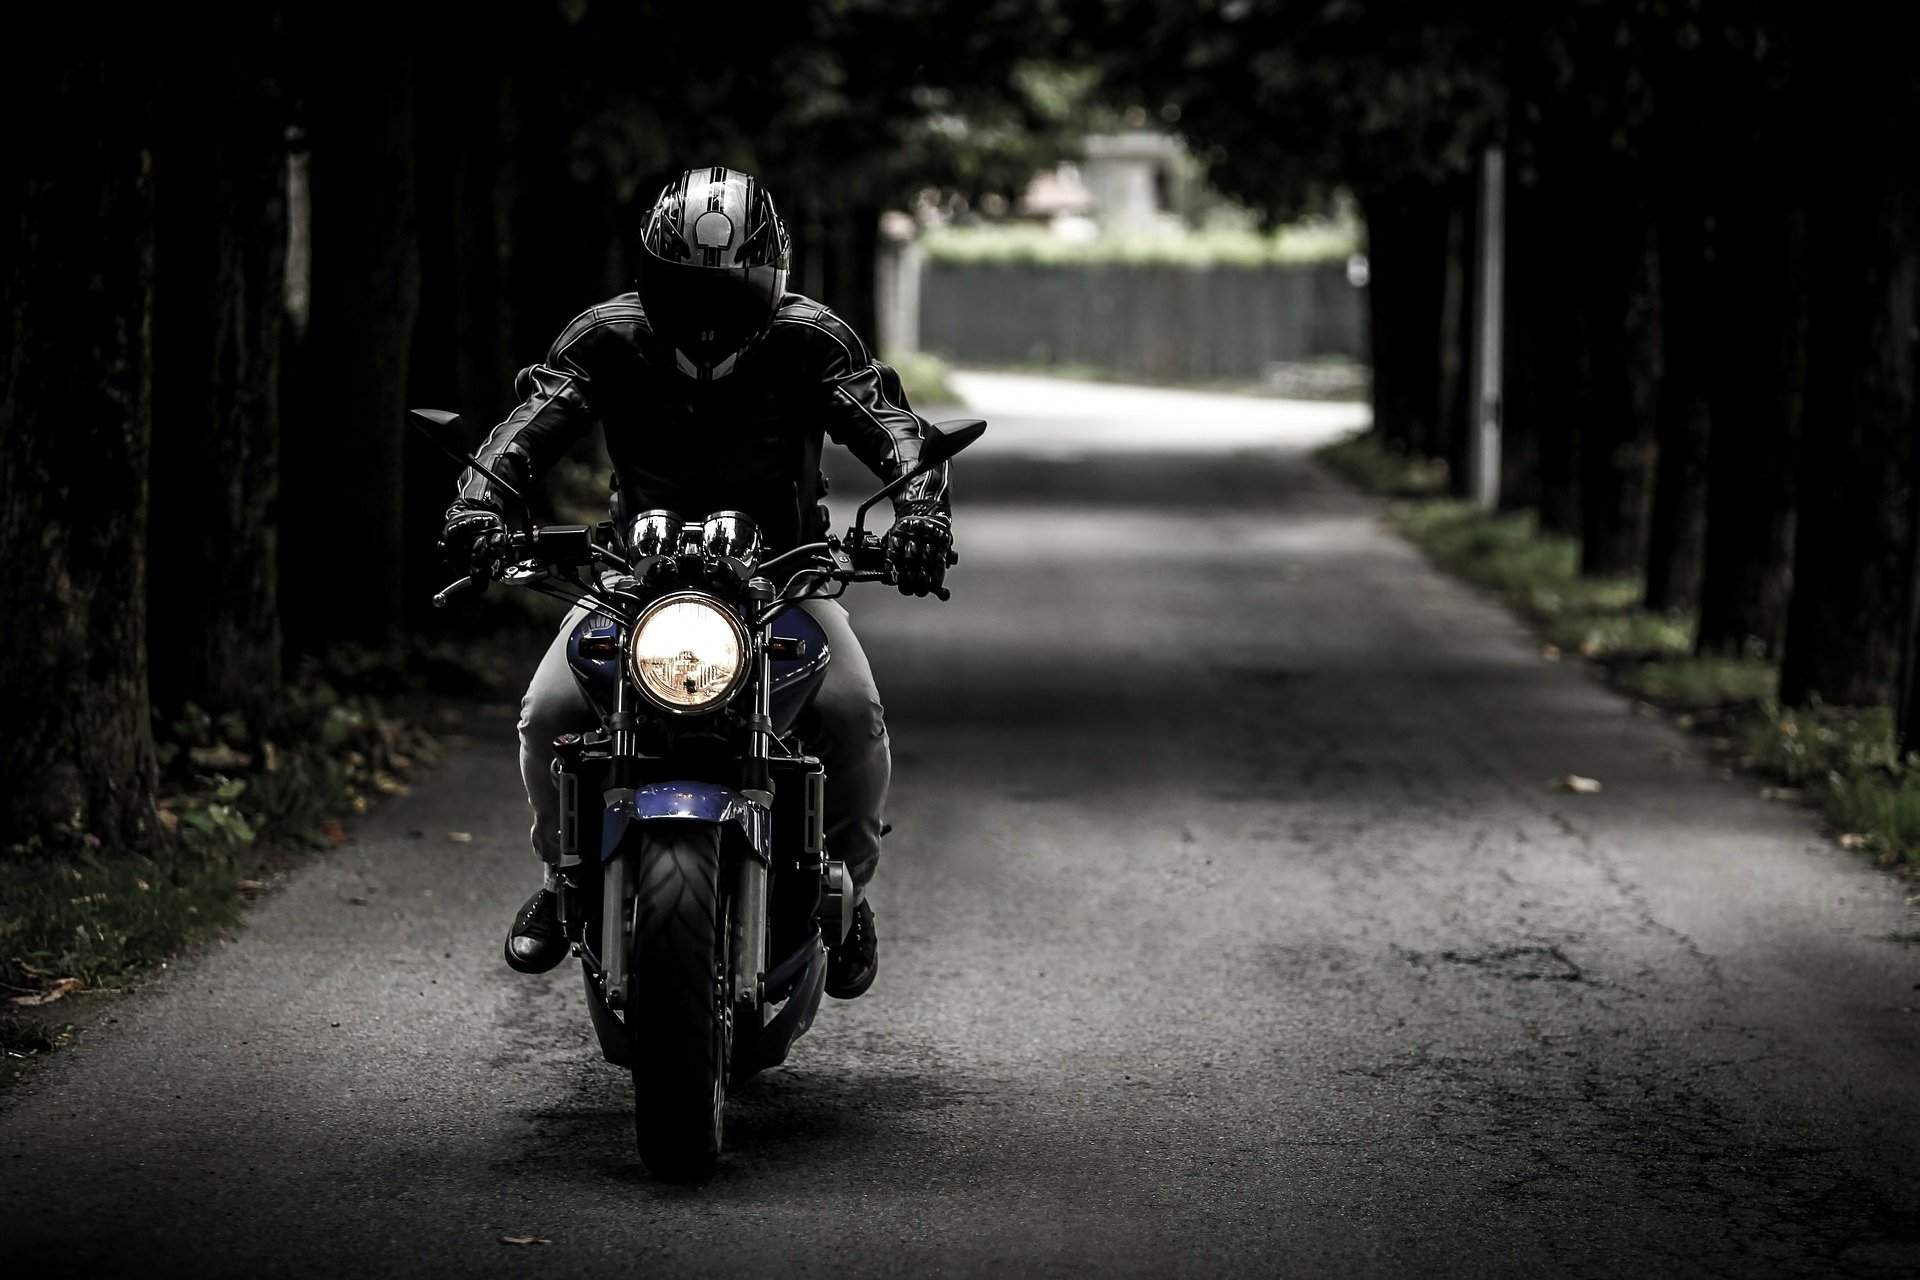 Manejar motocicleta mejora salud mental: estudio 